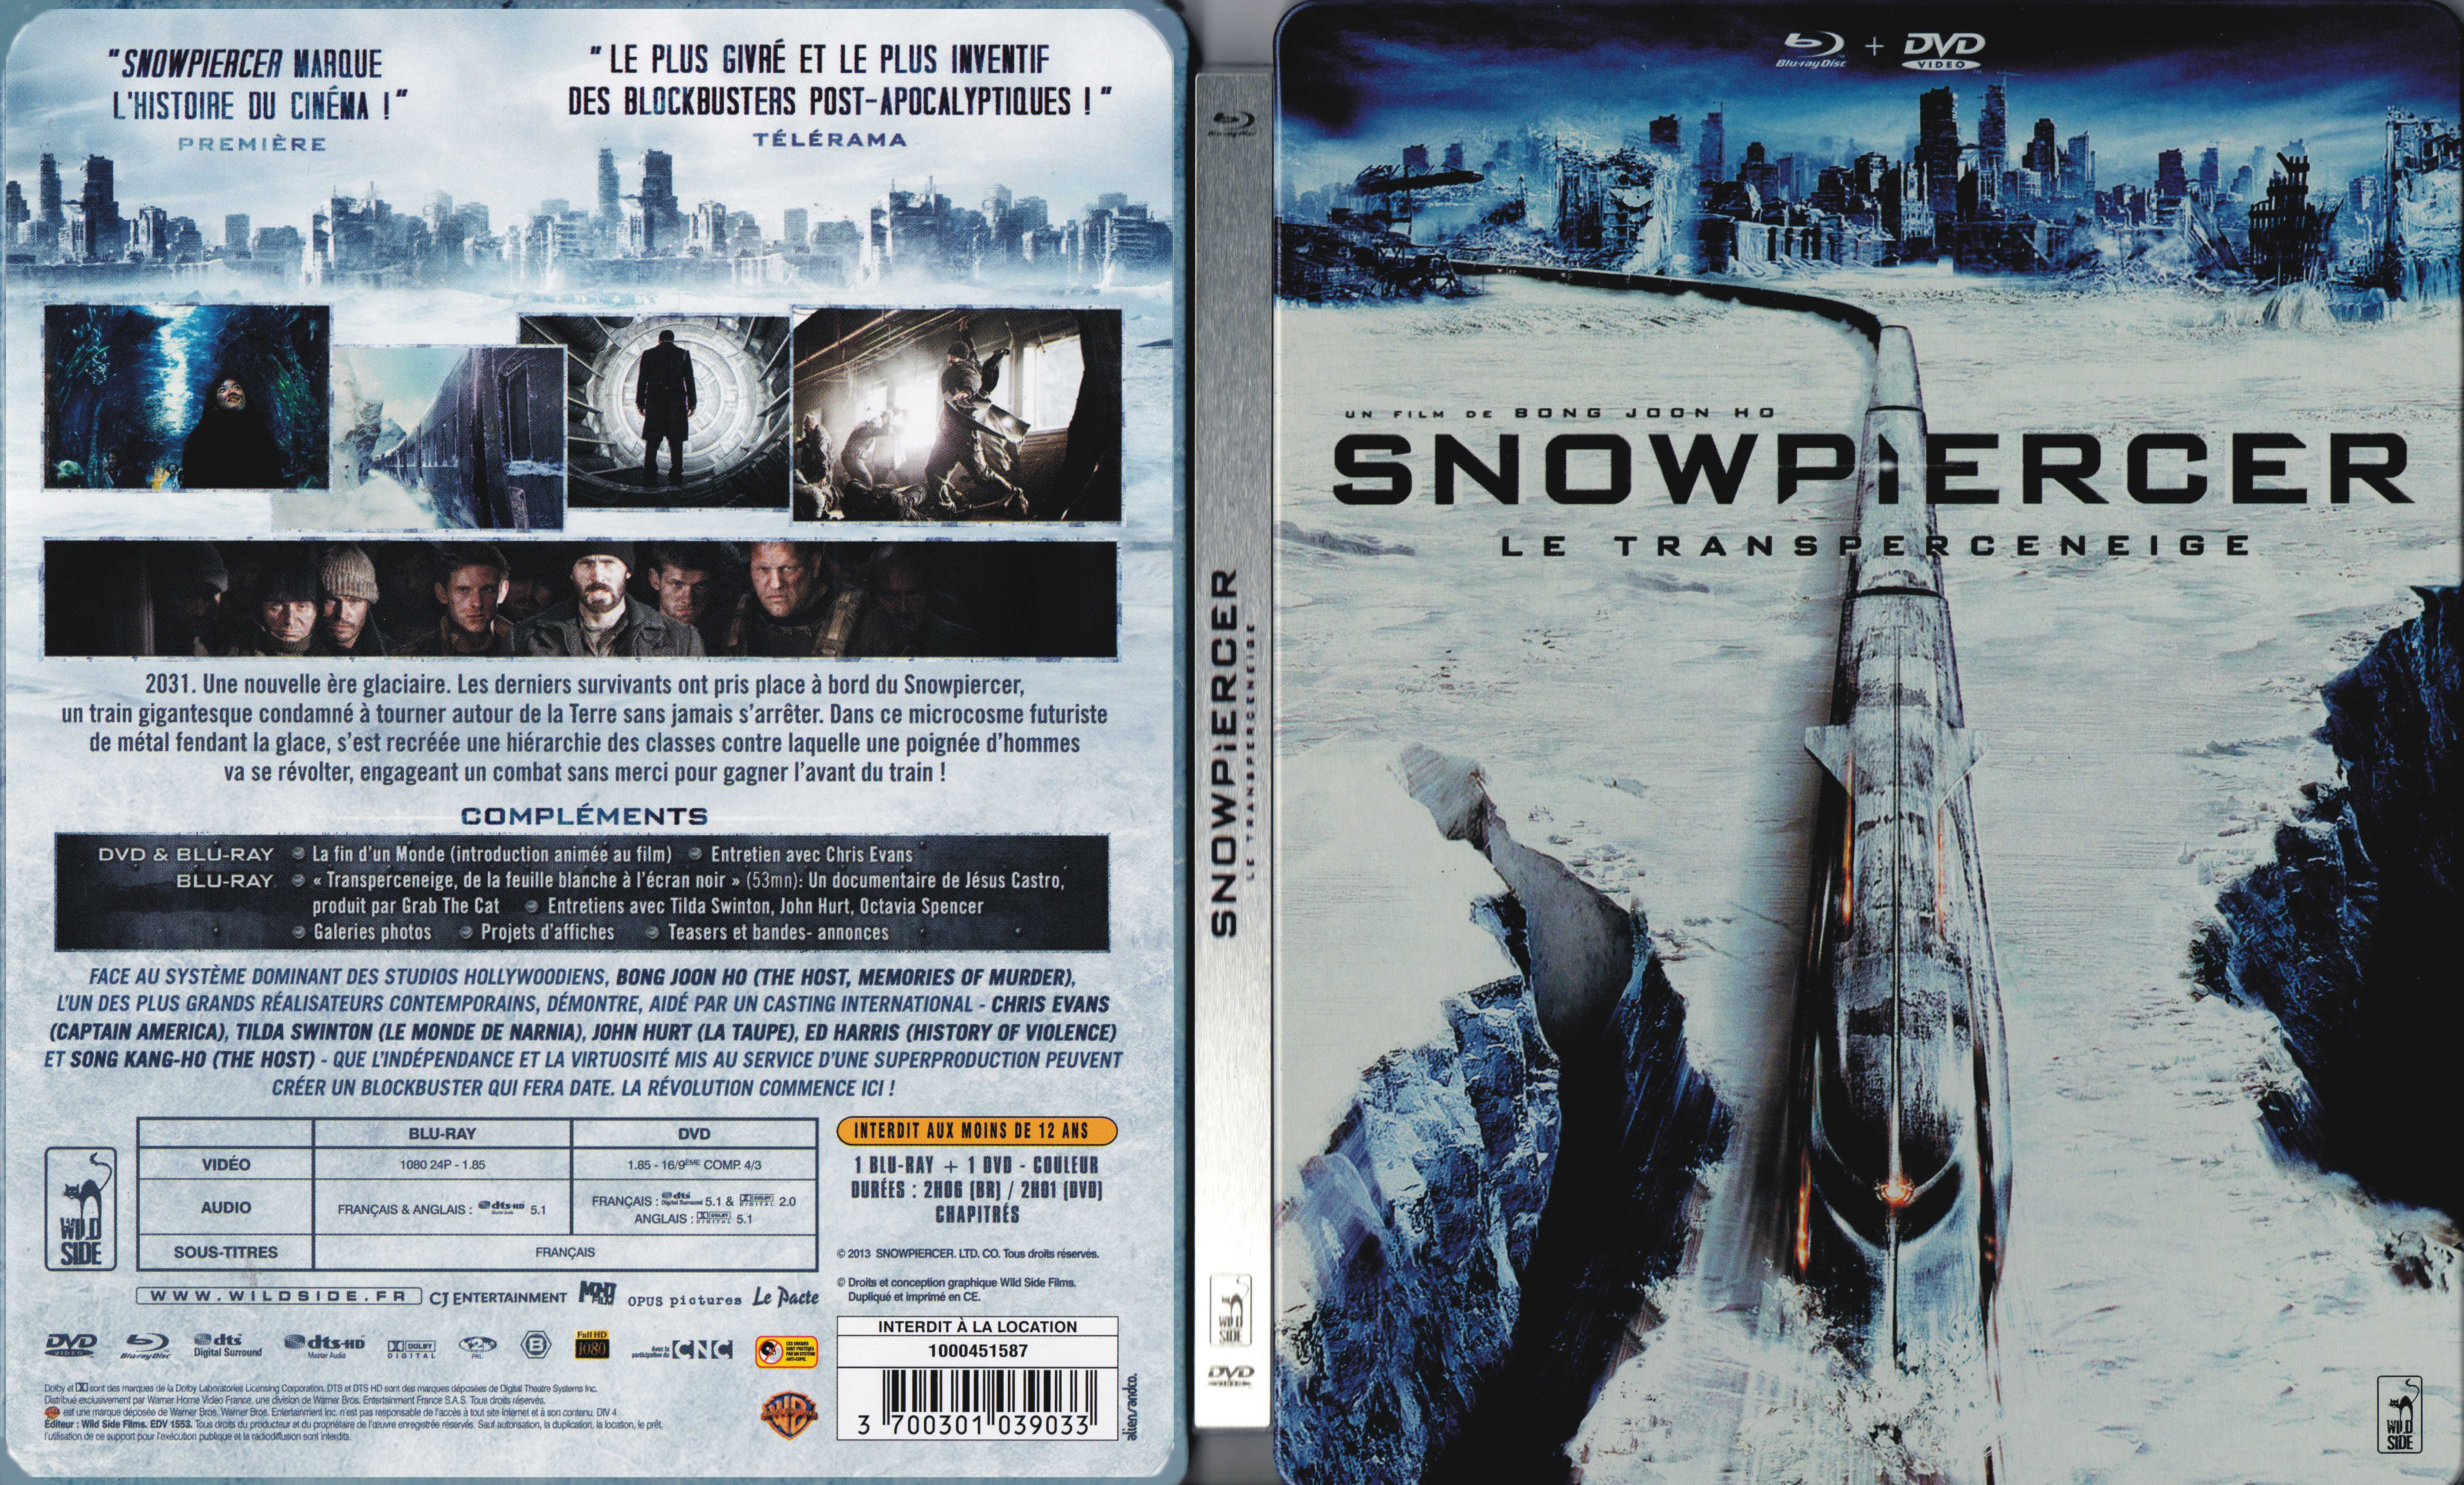 Jaquette DVD Snowpiercer, Le transperceneige (BLU-RAY) v2